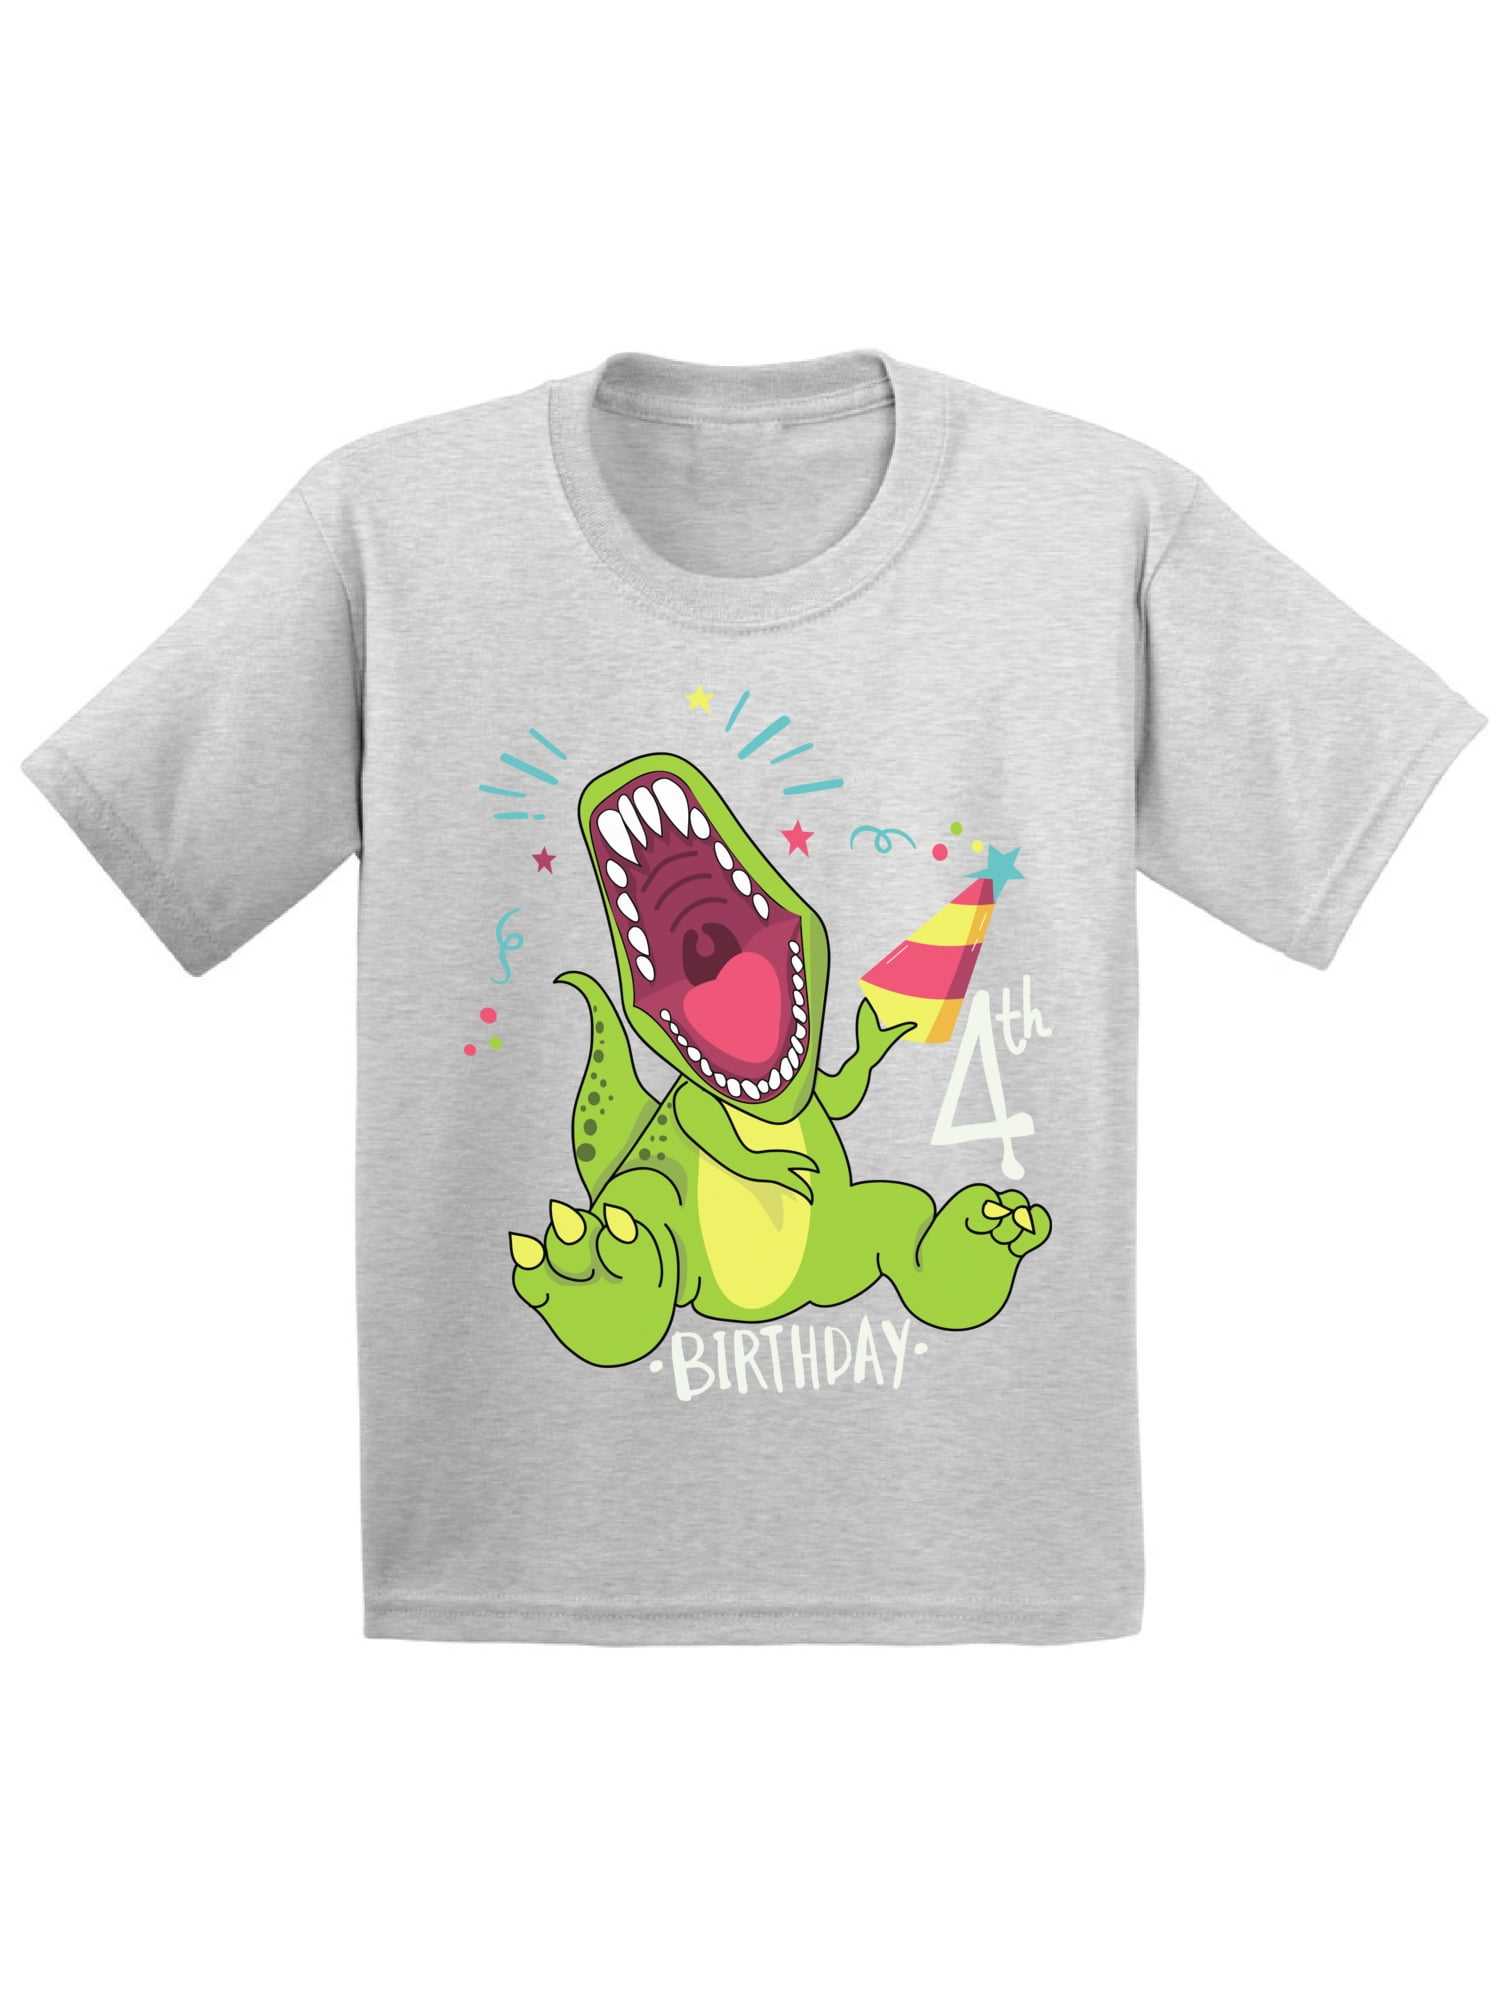 Dinosaur Shirt Kids Men Womens Toddler Adult Boys Girl Dinosaur Shirt Custom Birthday Gift Tshirt Personalized T-shirt Dino T Shirt Tee KR07